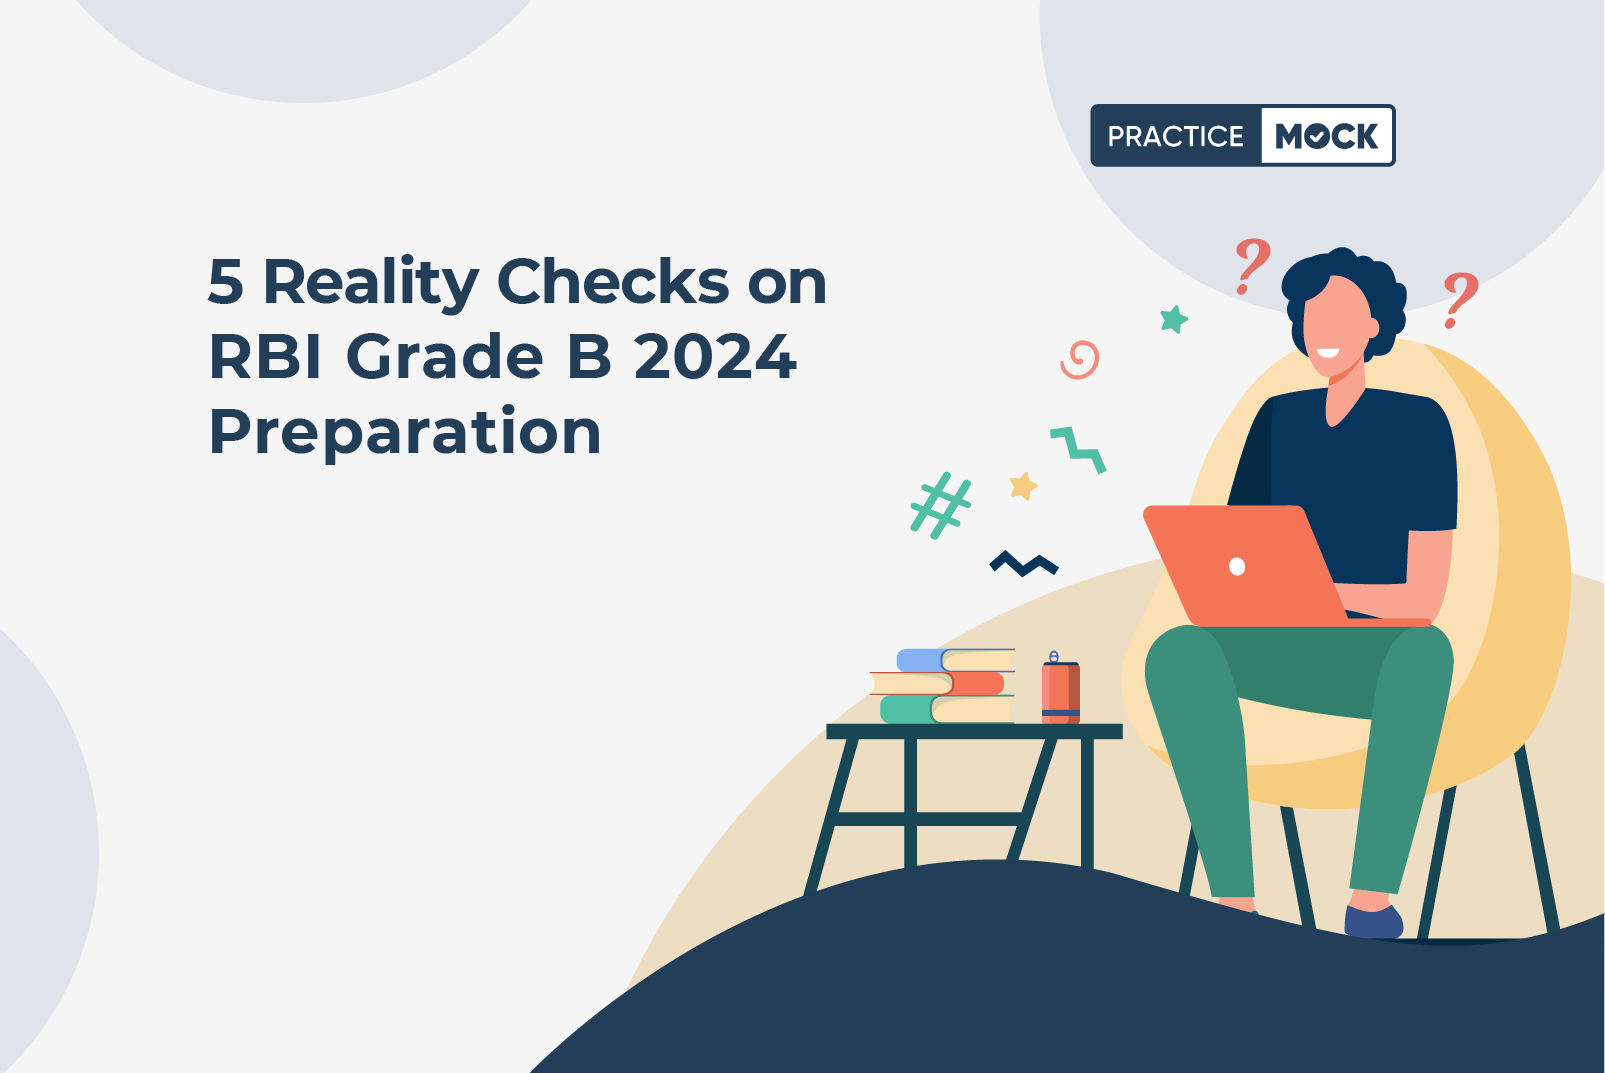 5 Reality Checks on RBI Grade B 2024 Preparation